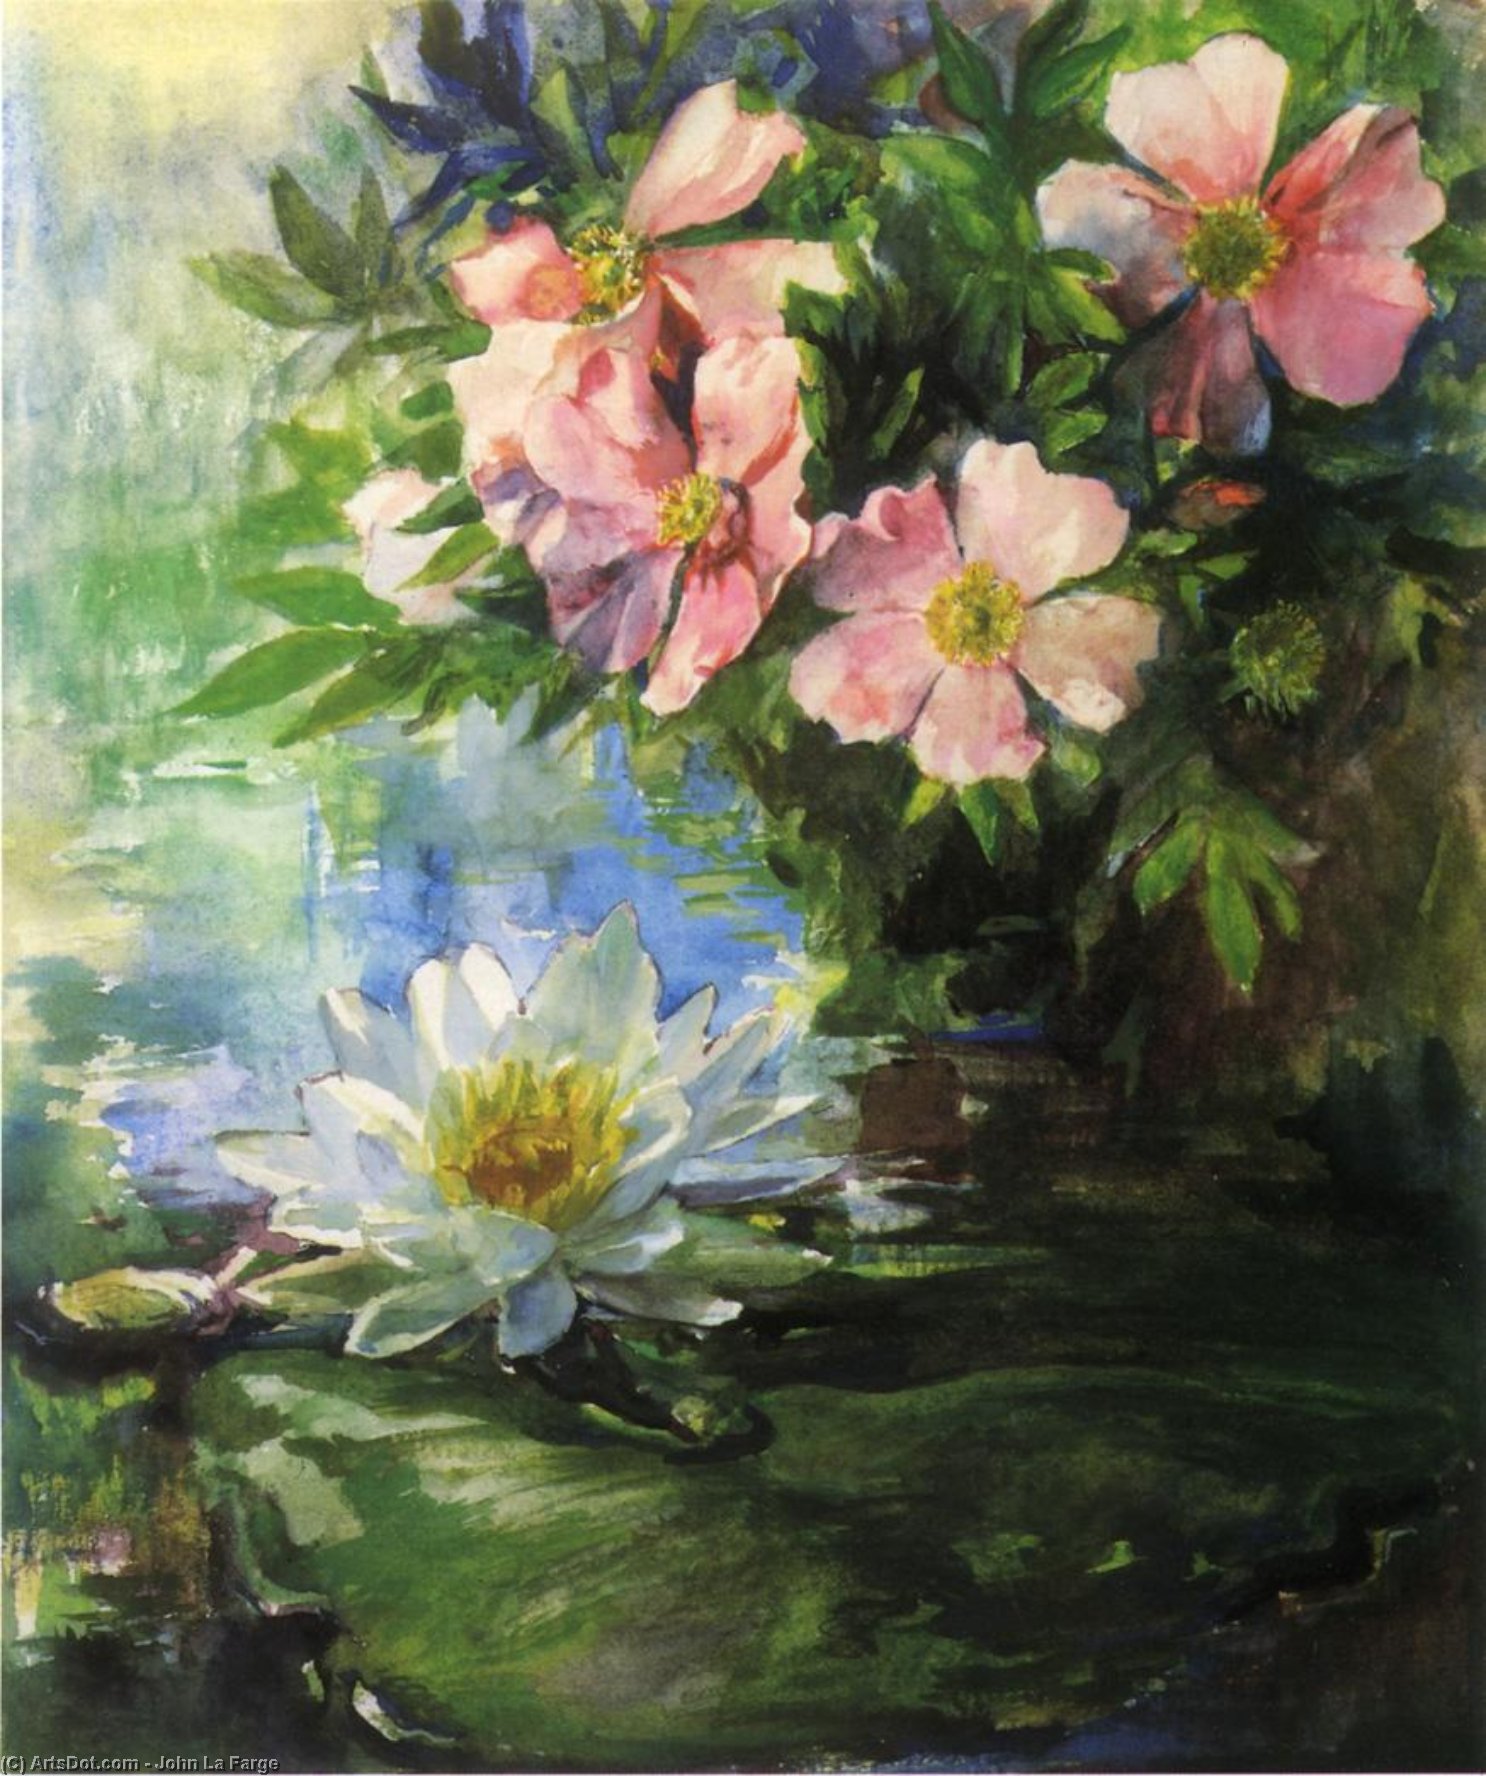 Wikioo.org - Encyklopedia Sztuk Pięknych - Malarstwo, Grafika John La Farge - Wild Roses and Water Lily - Study of Sunlight